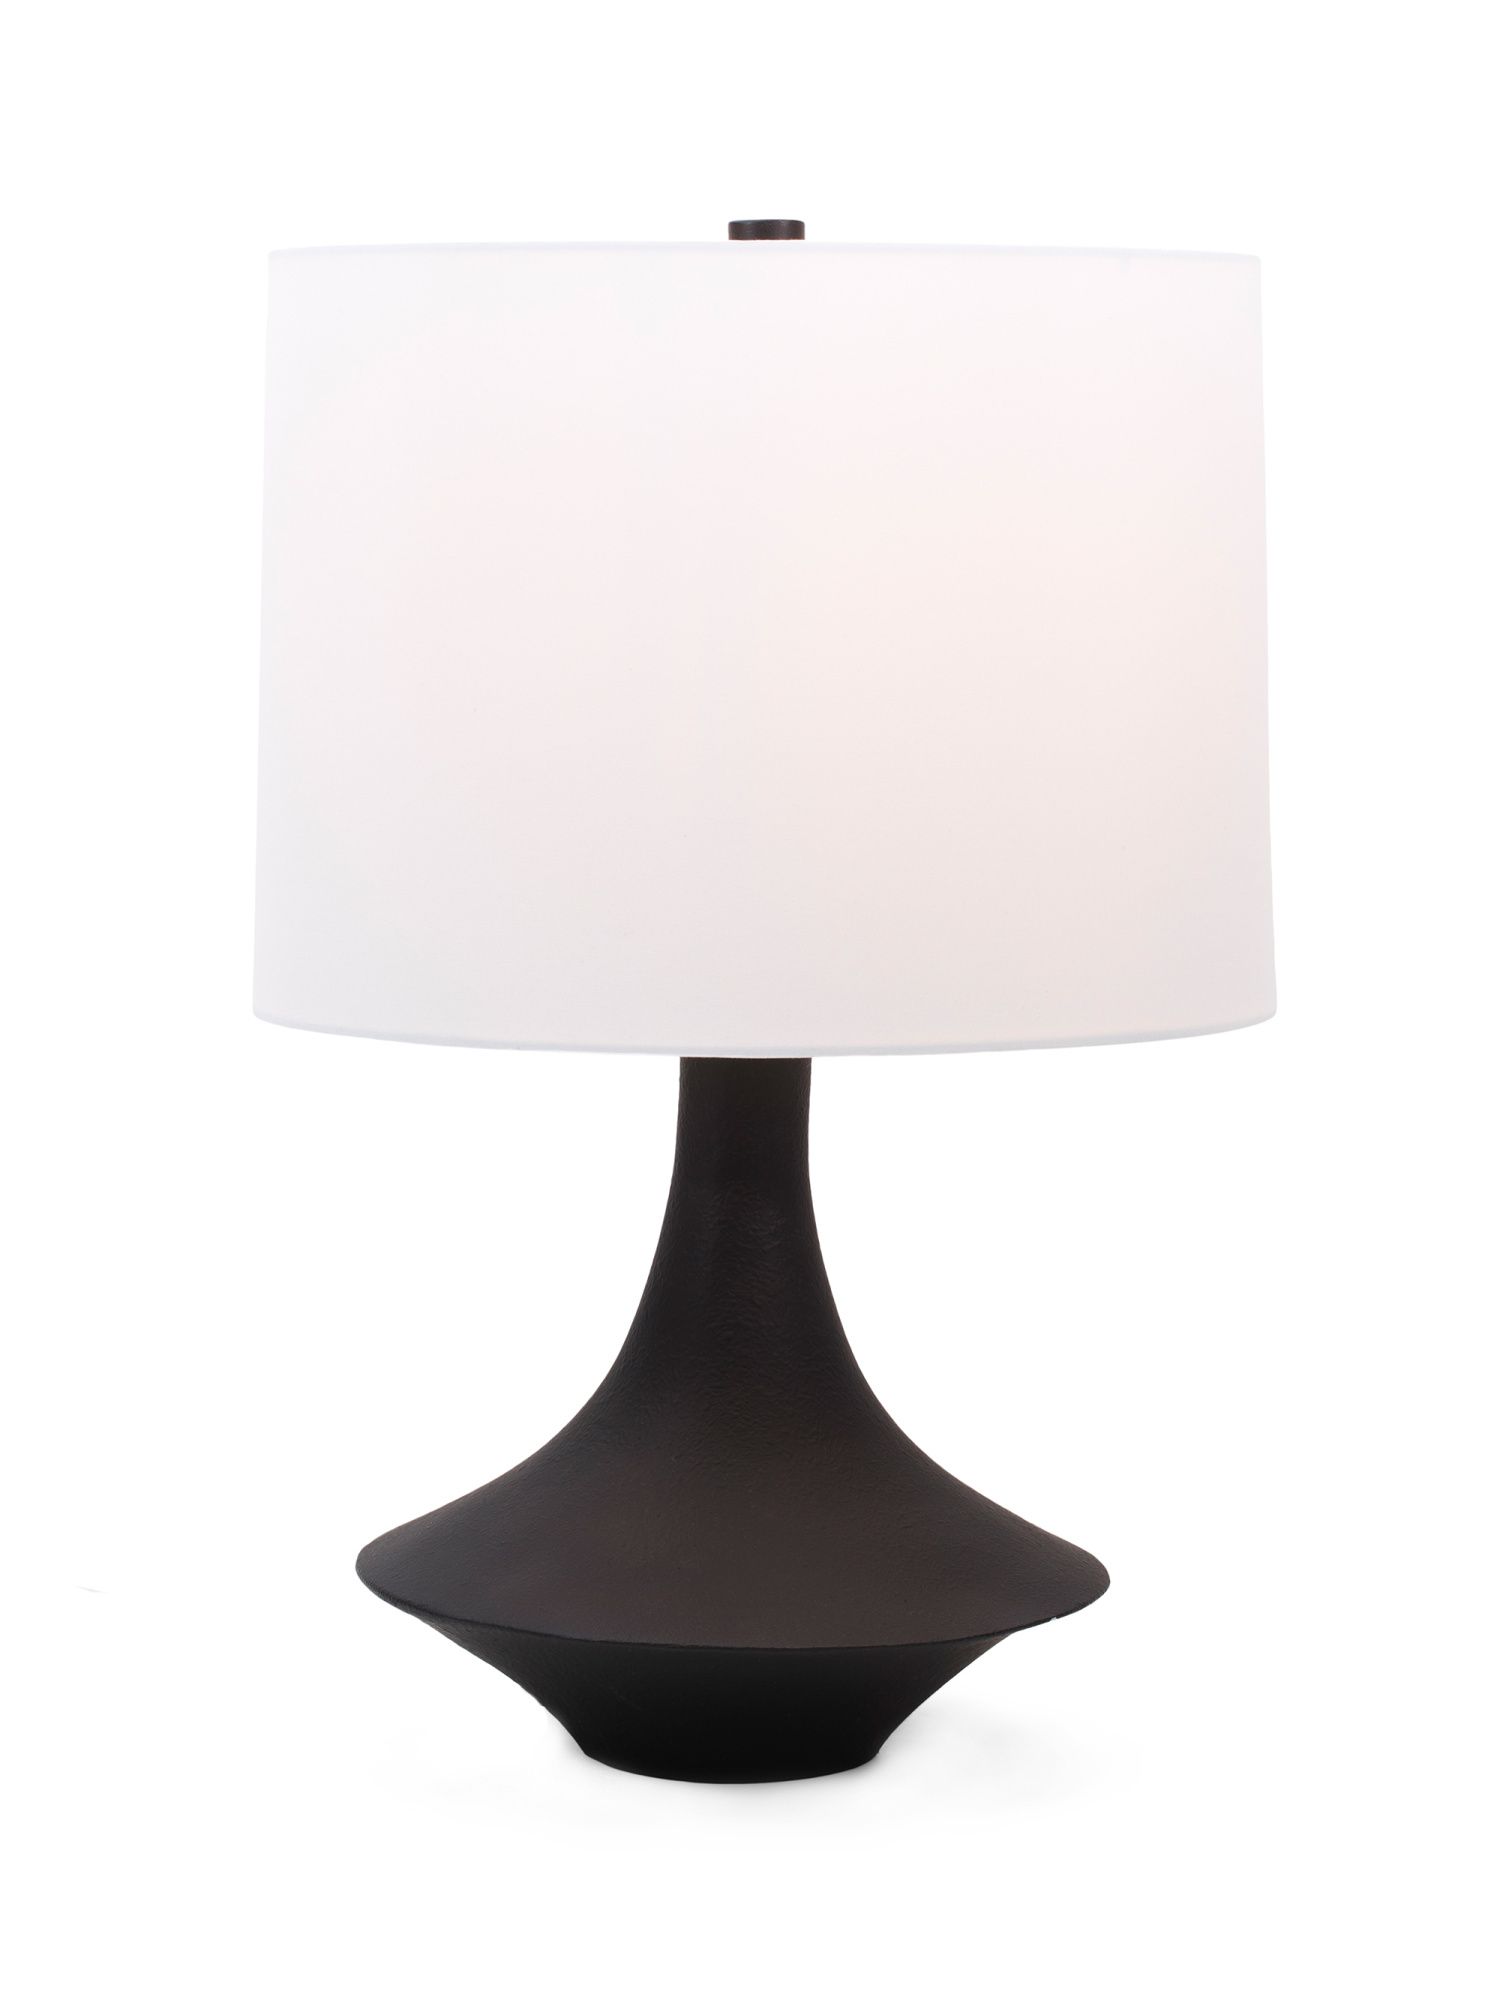 22in Bryant Table Lamp | TJ Maxx